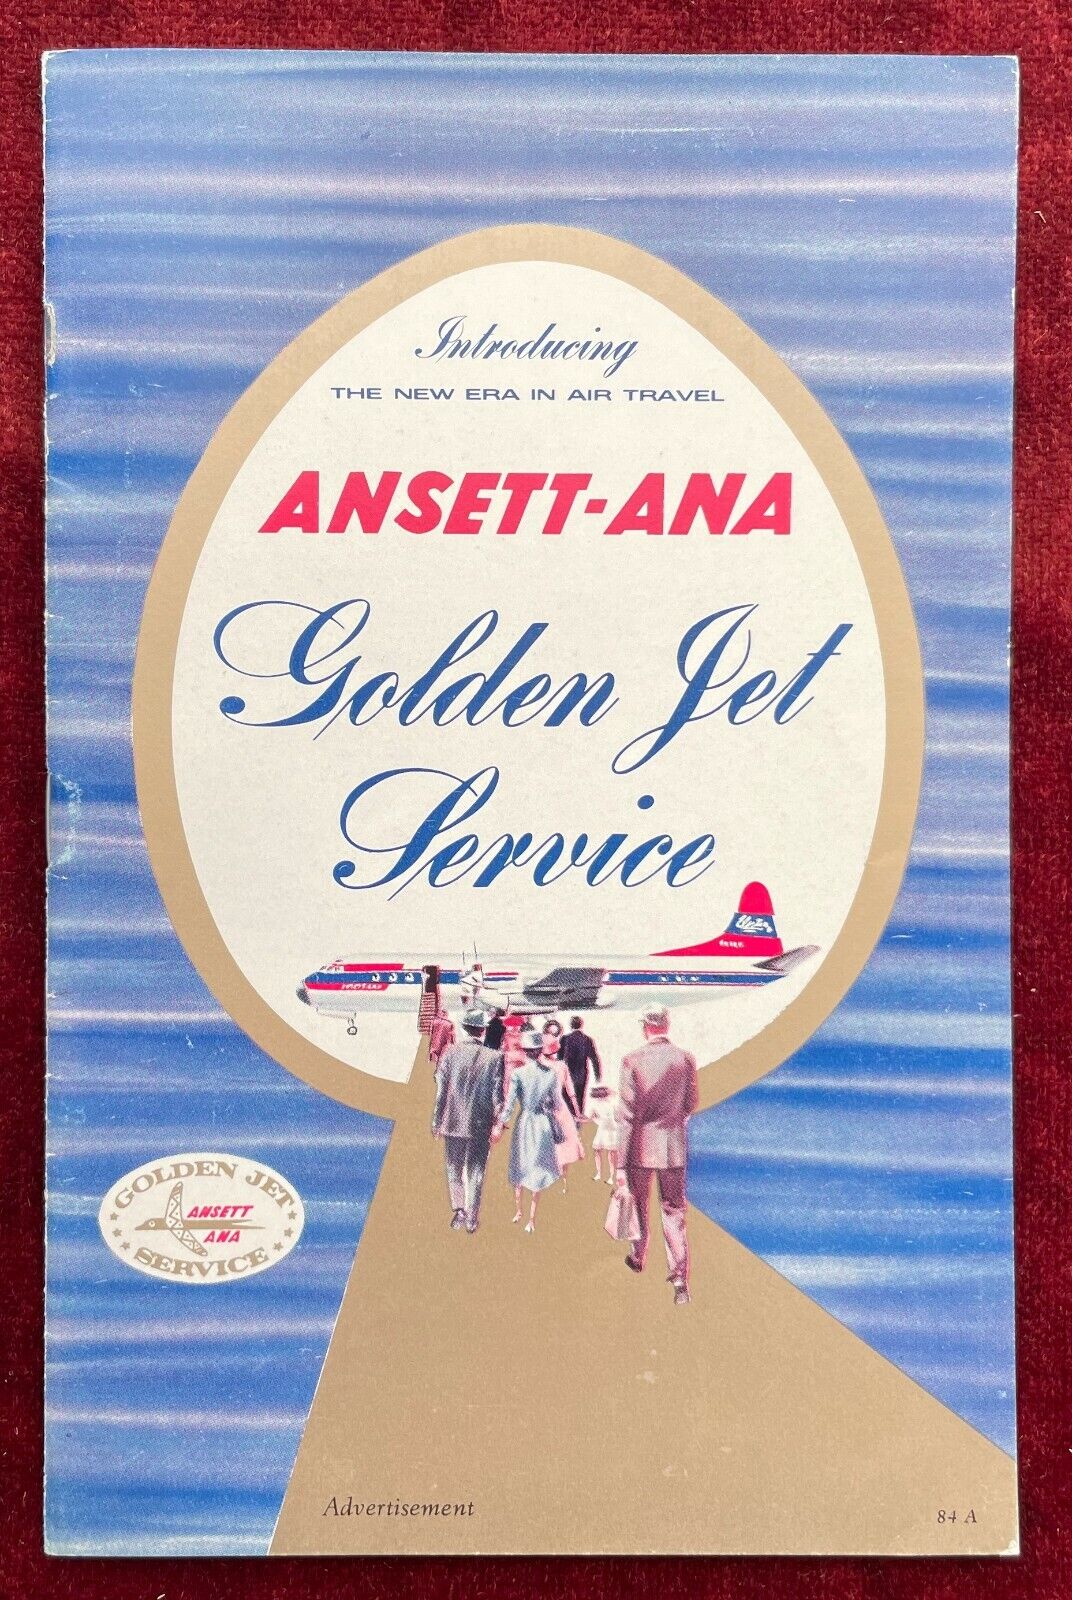 Ansett-ANA Golden Jet Service brochure from May 1959